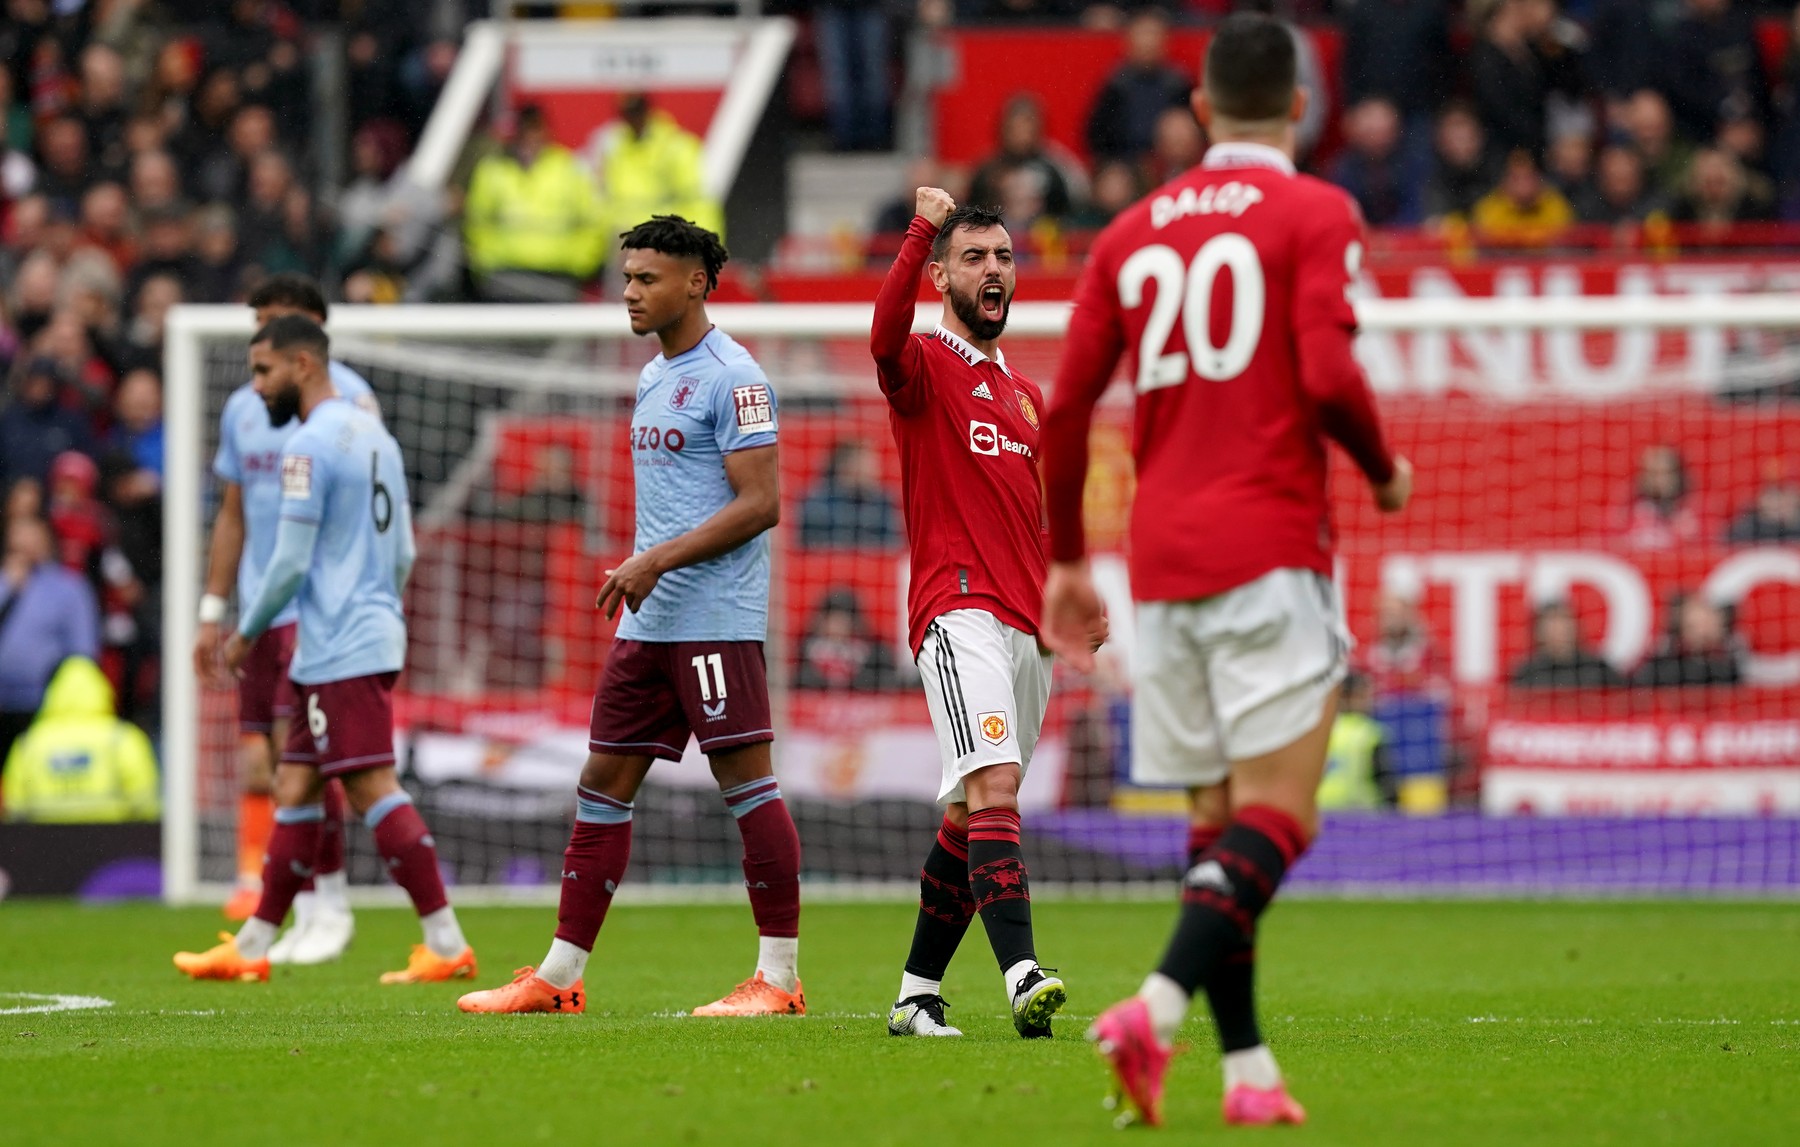 Manchester United - Aston Villa 1-0. Bruno Fernandes a marcat unicul gol. Clasamentul din Premier League, acum